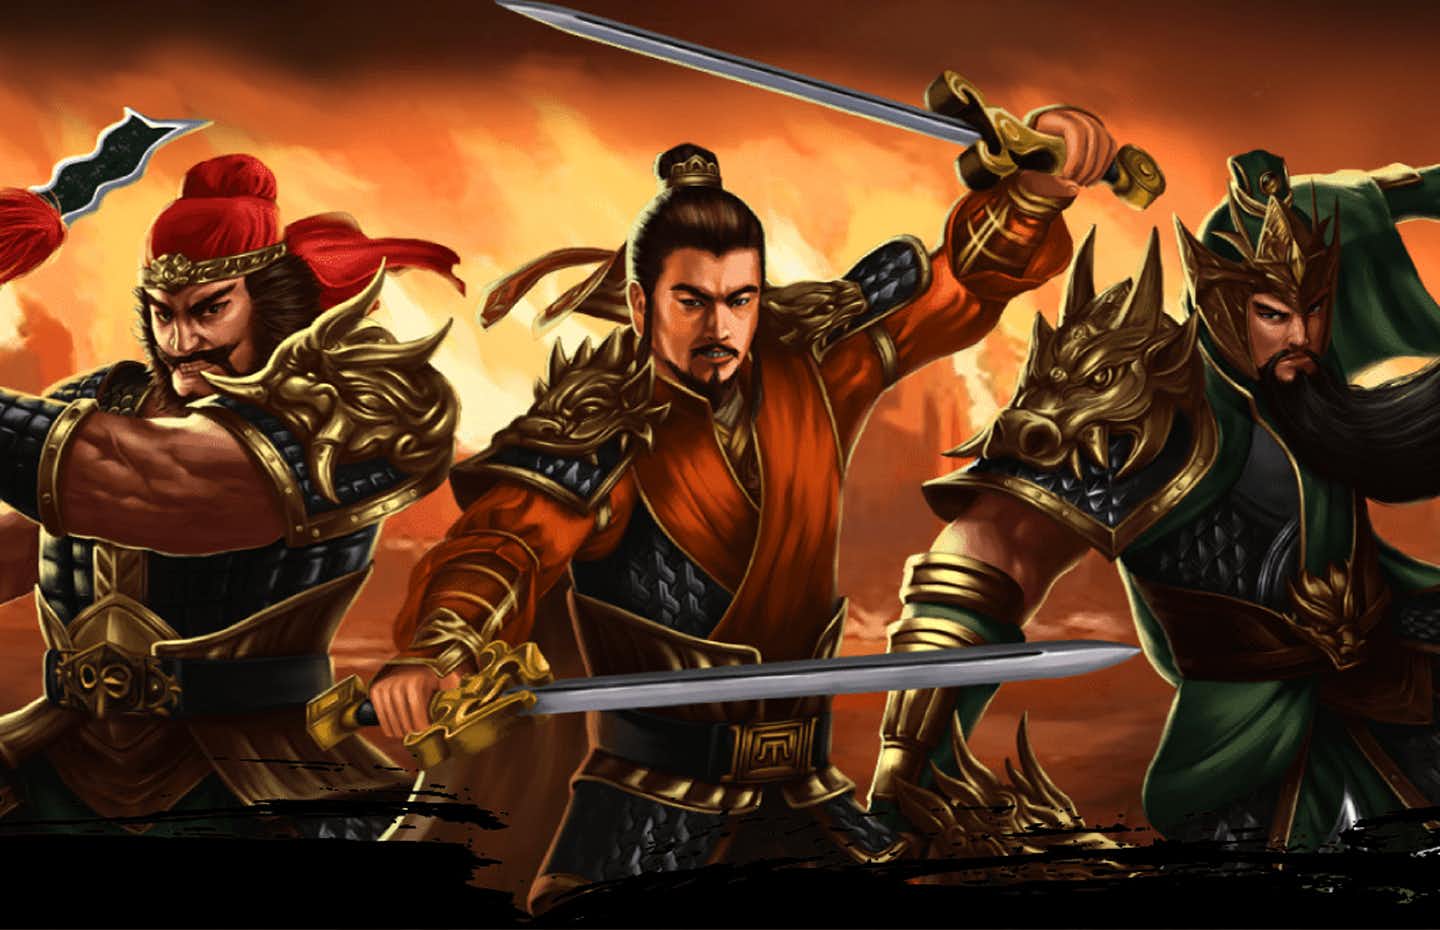 background image of The Three Kingdoms